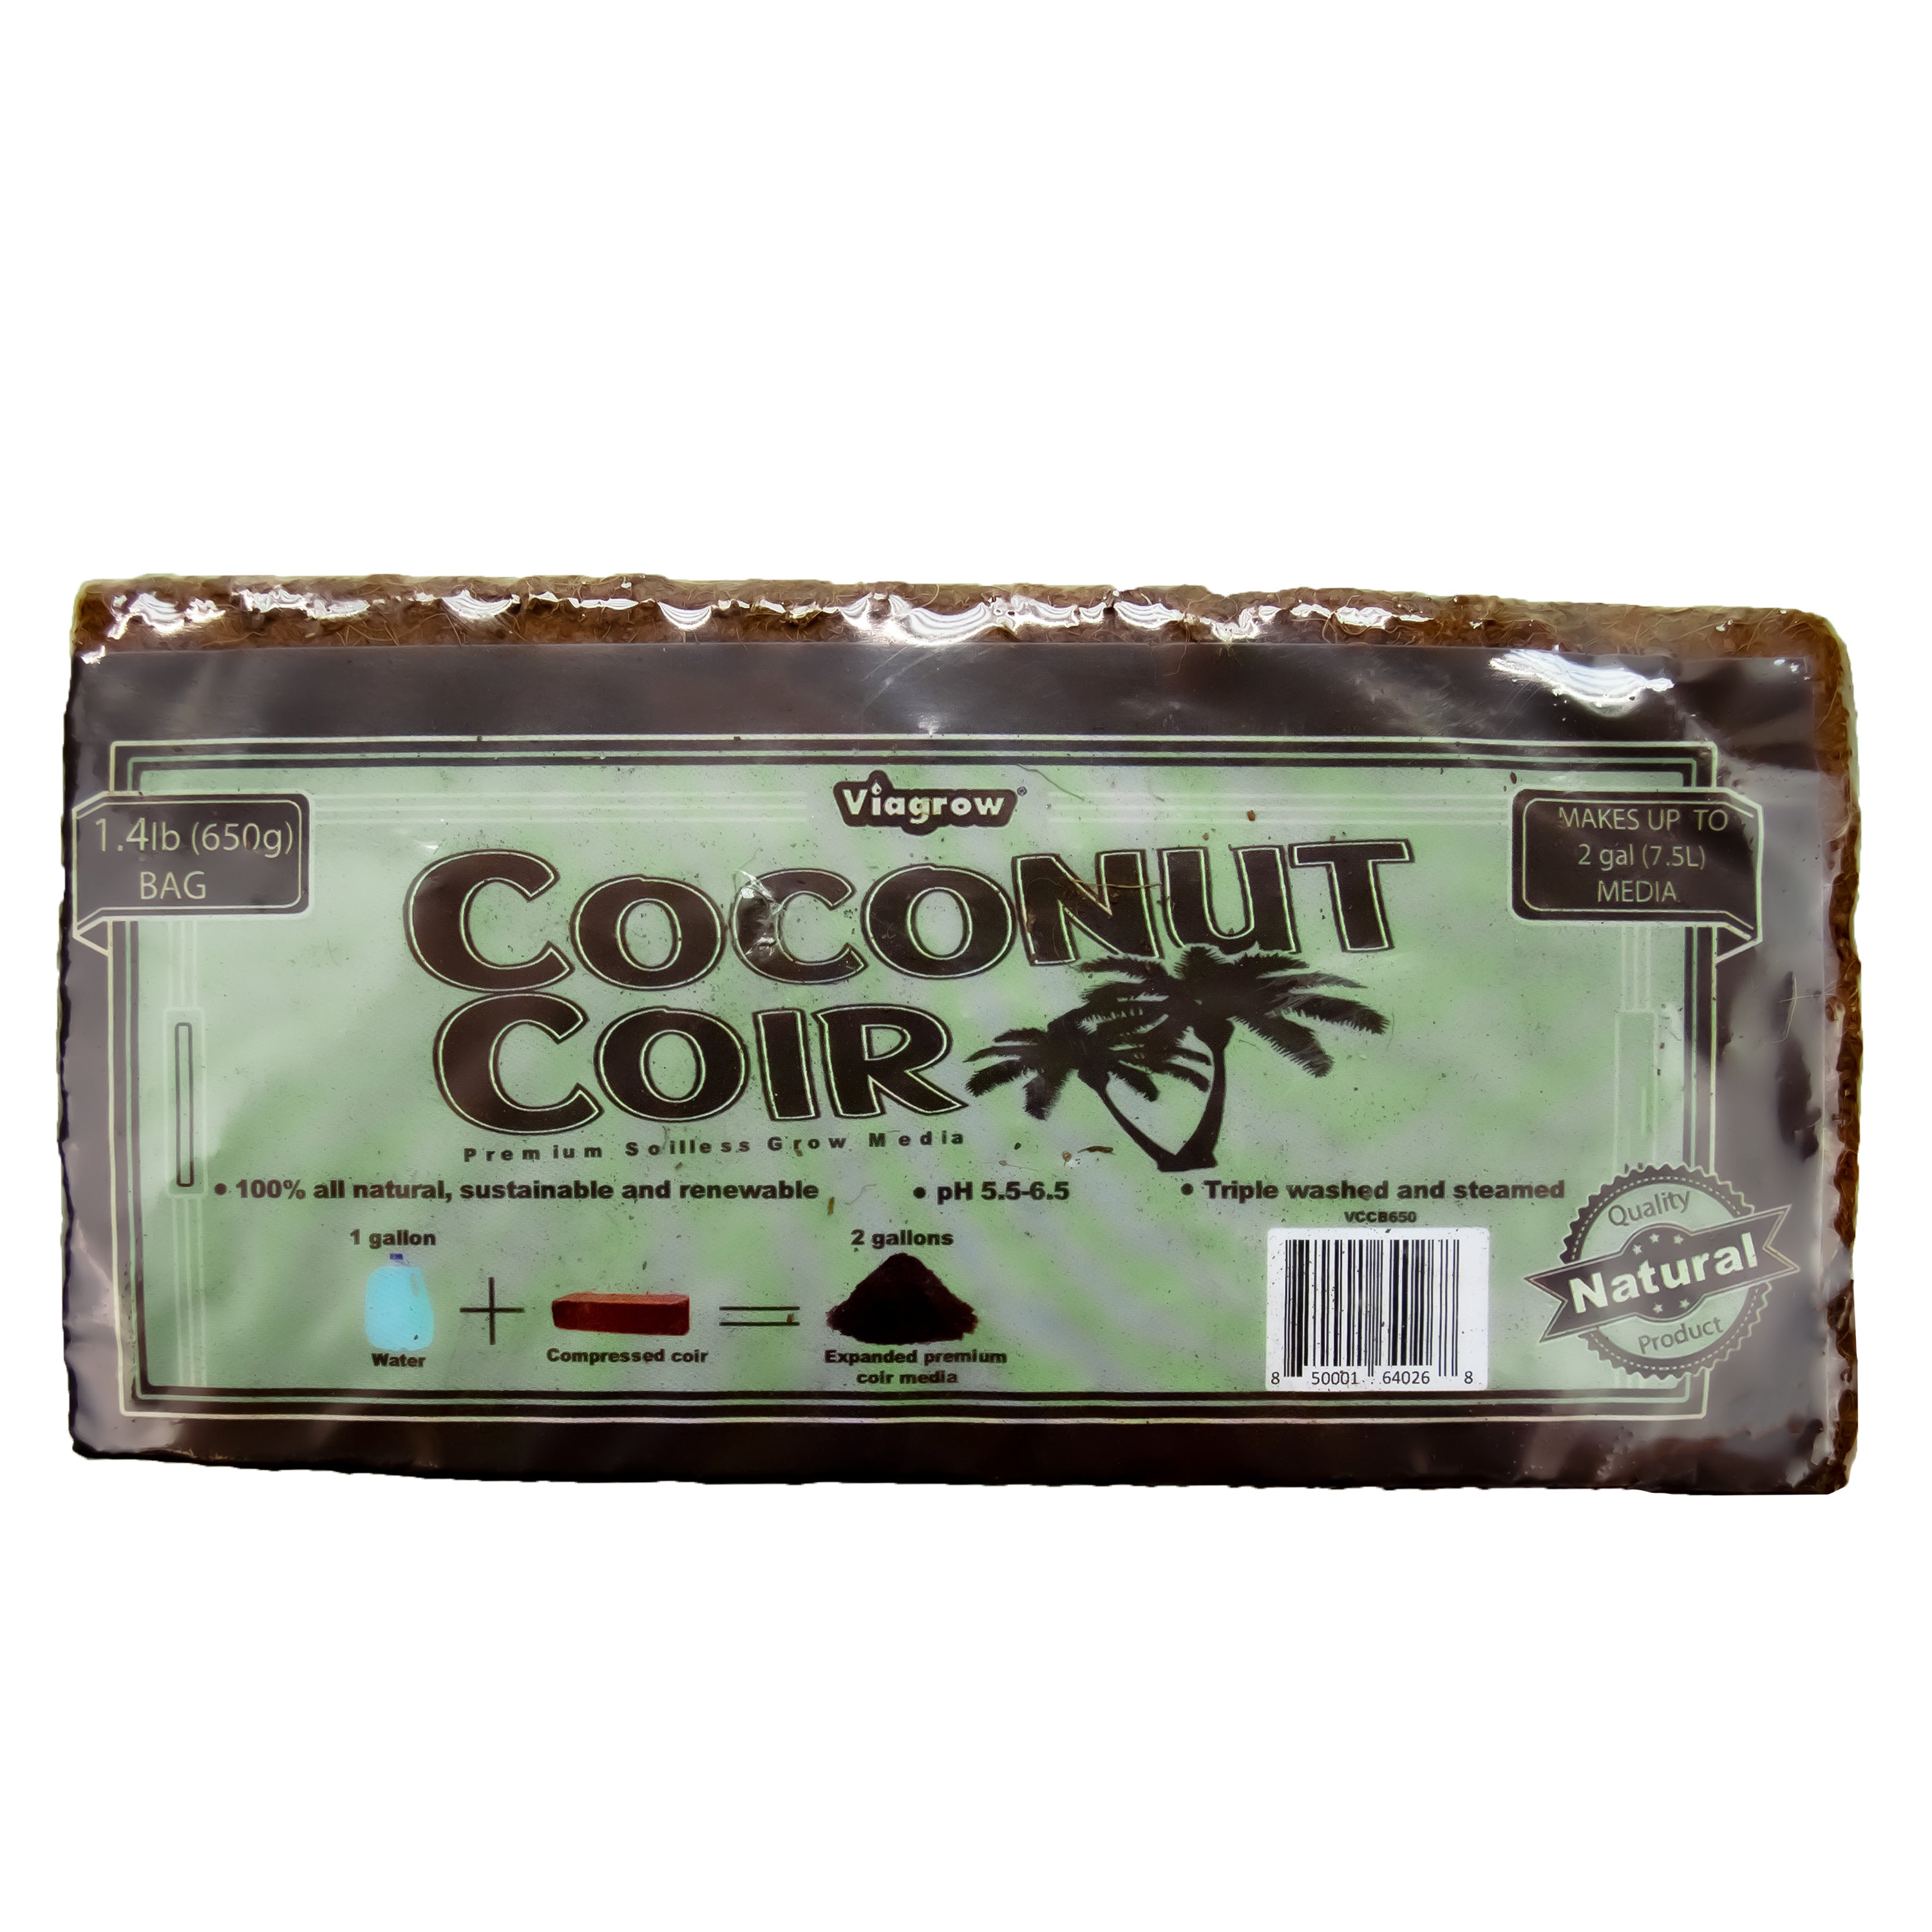 1.4 lbs. 650g Premium Soilless Coconut Coir Brick Grow Media (Pallet 900 units)